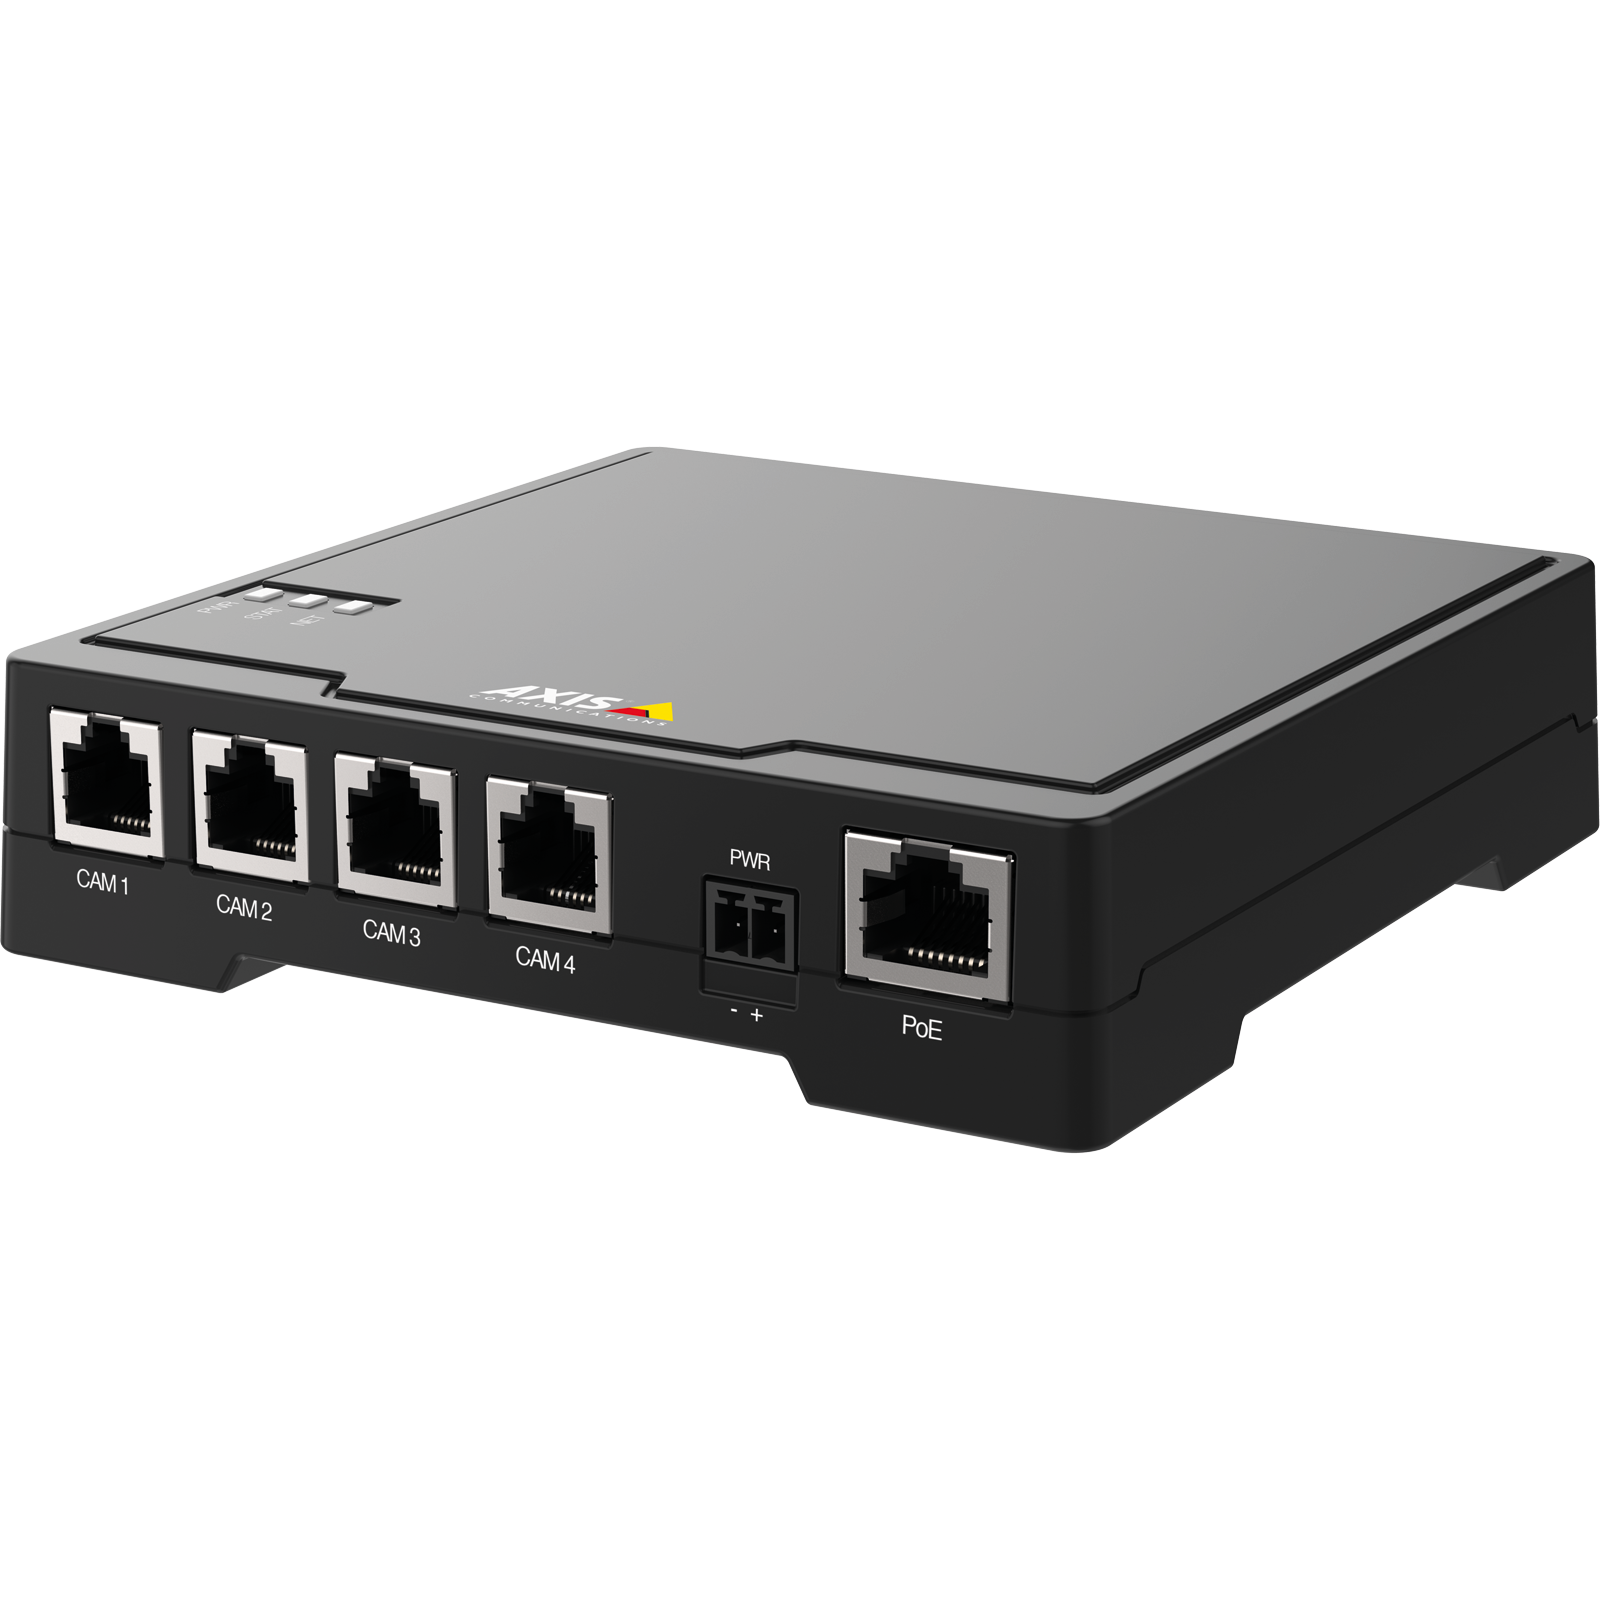 0778-001 Axis f34 Main Unit-Video server 